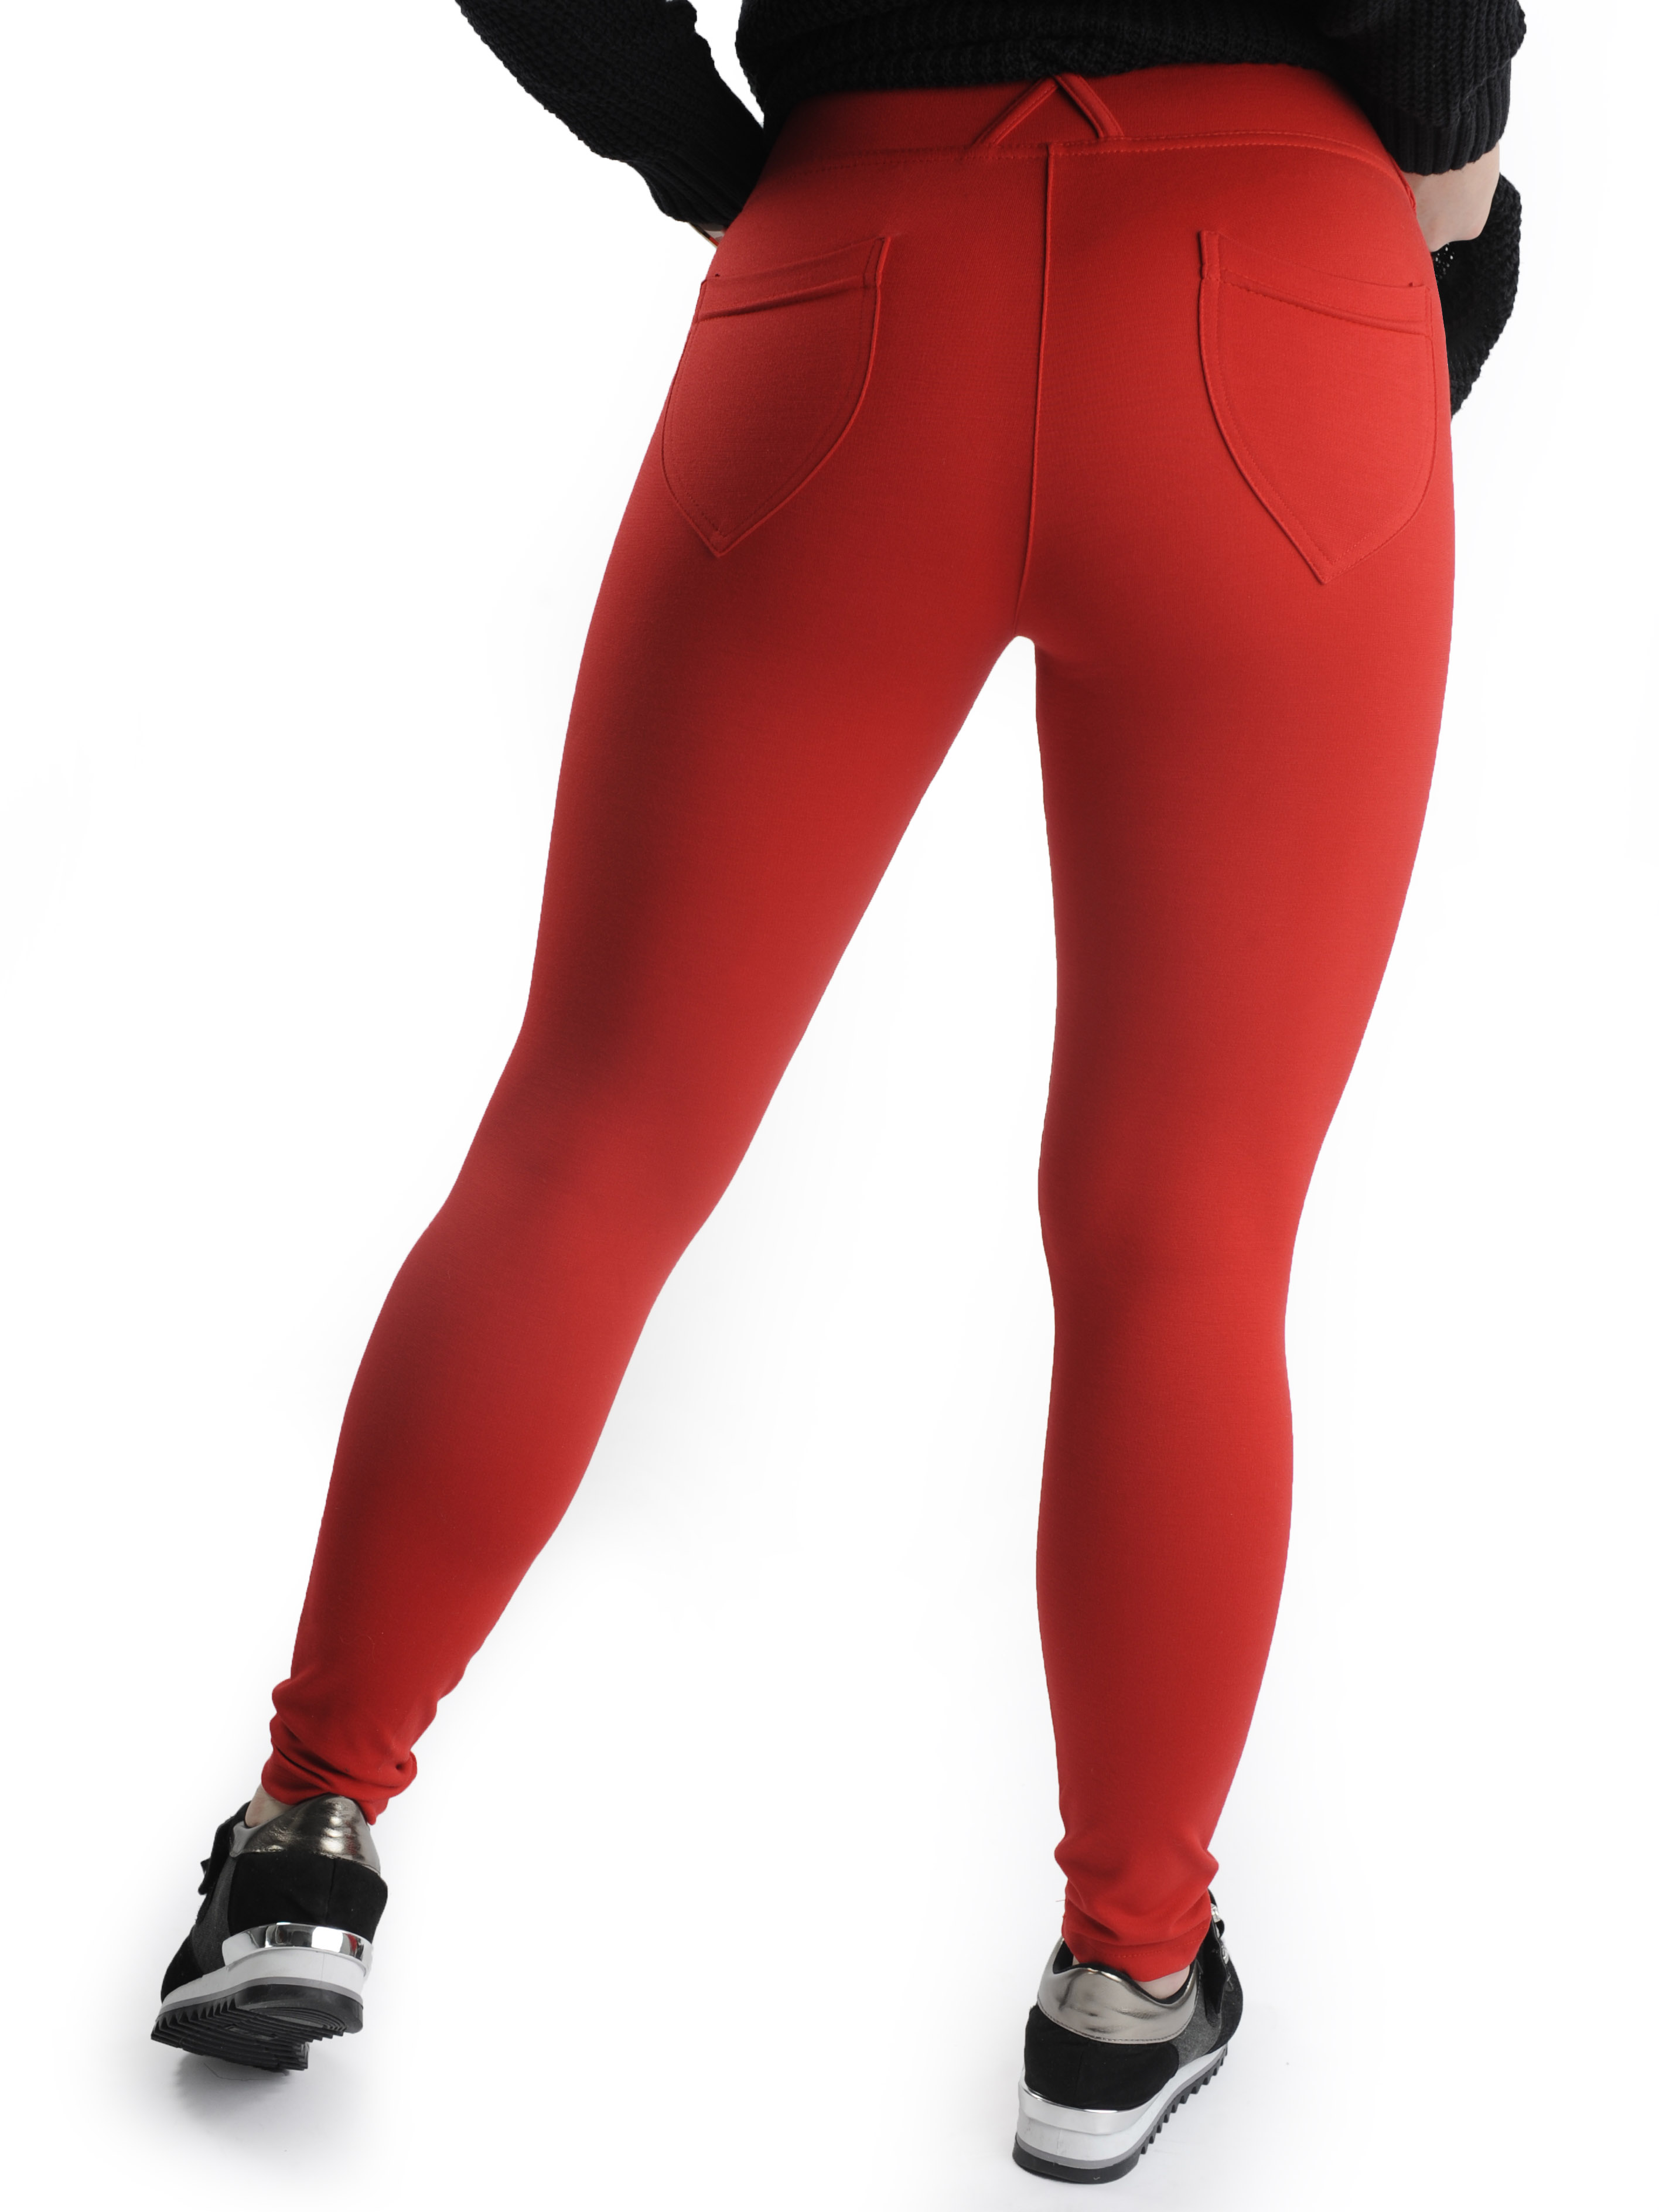 P.C. Styling takataskulliset leggingsit punainen M/L